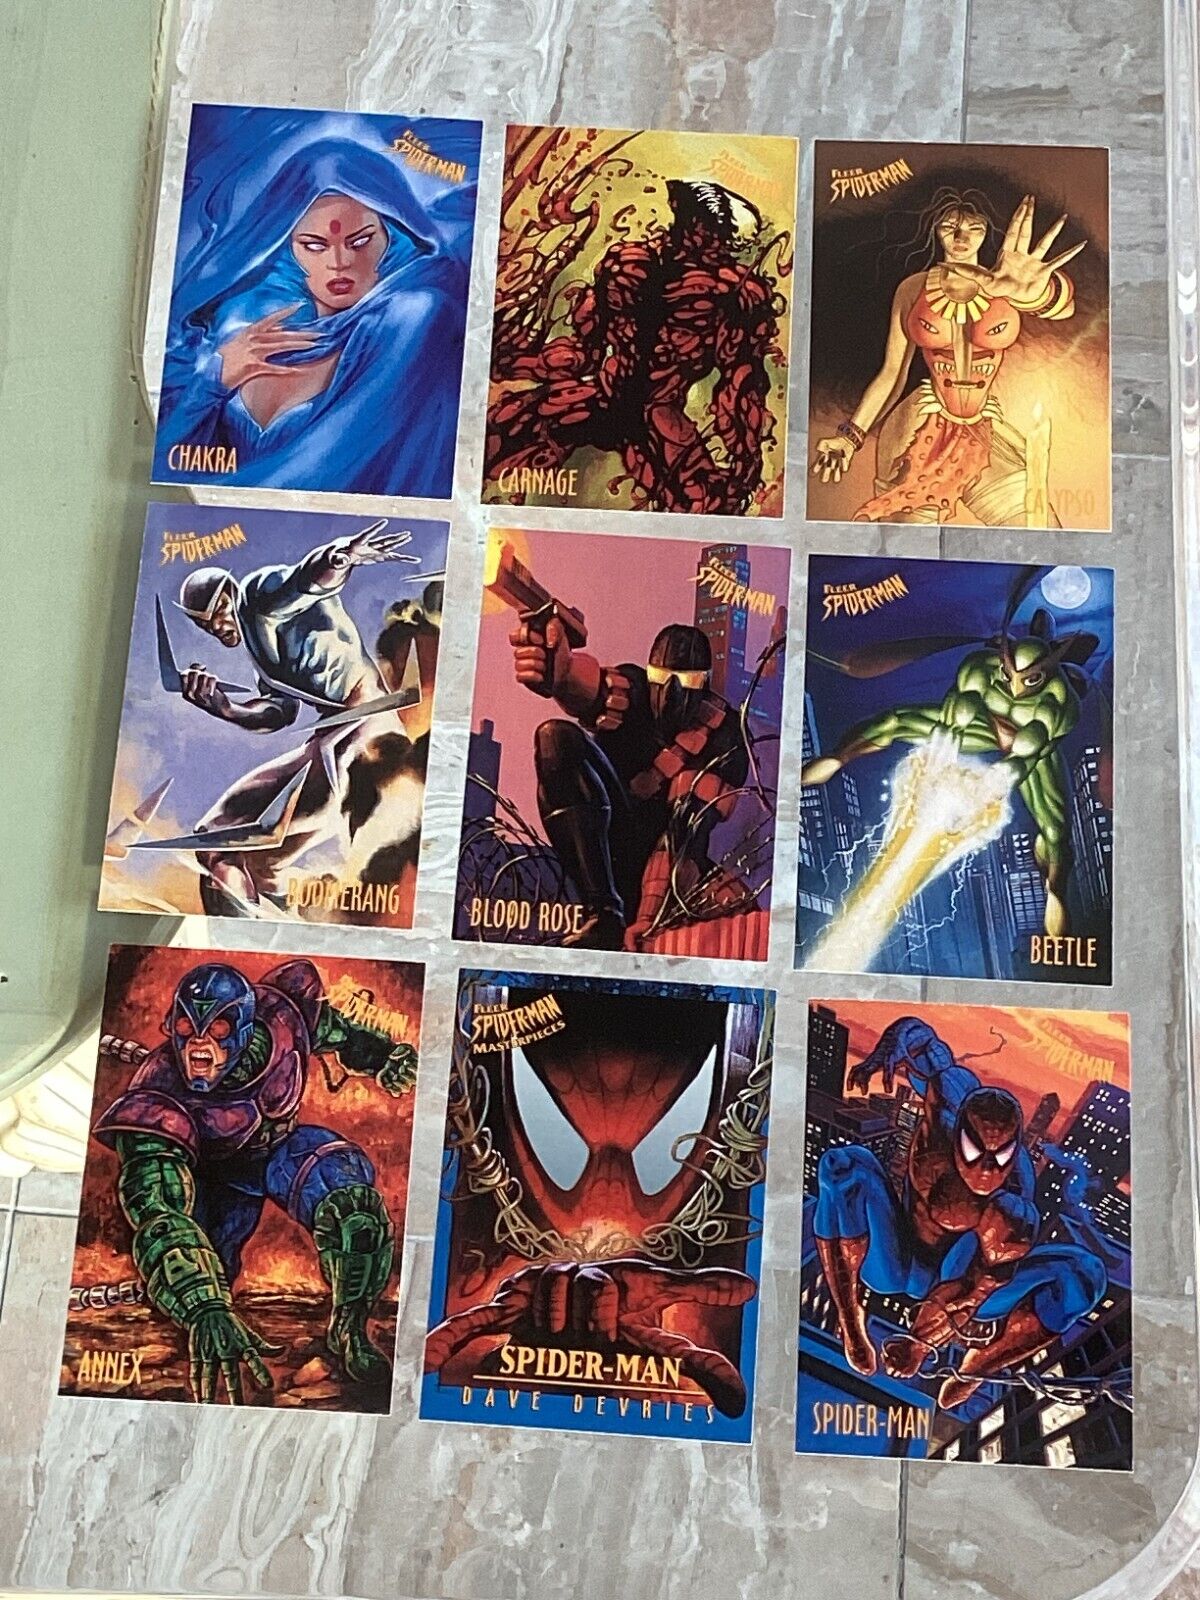 1997 - Fleer - Spider-Man Spiderman - Complete Base Card Set 1-50 - IMMACULATE